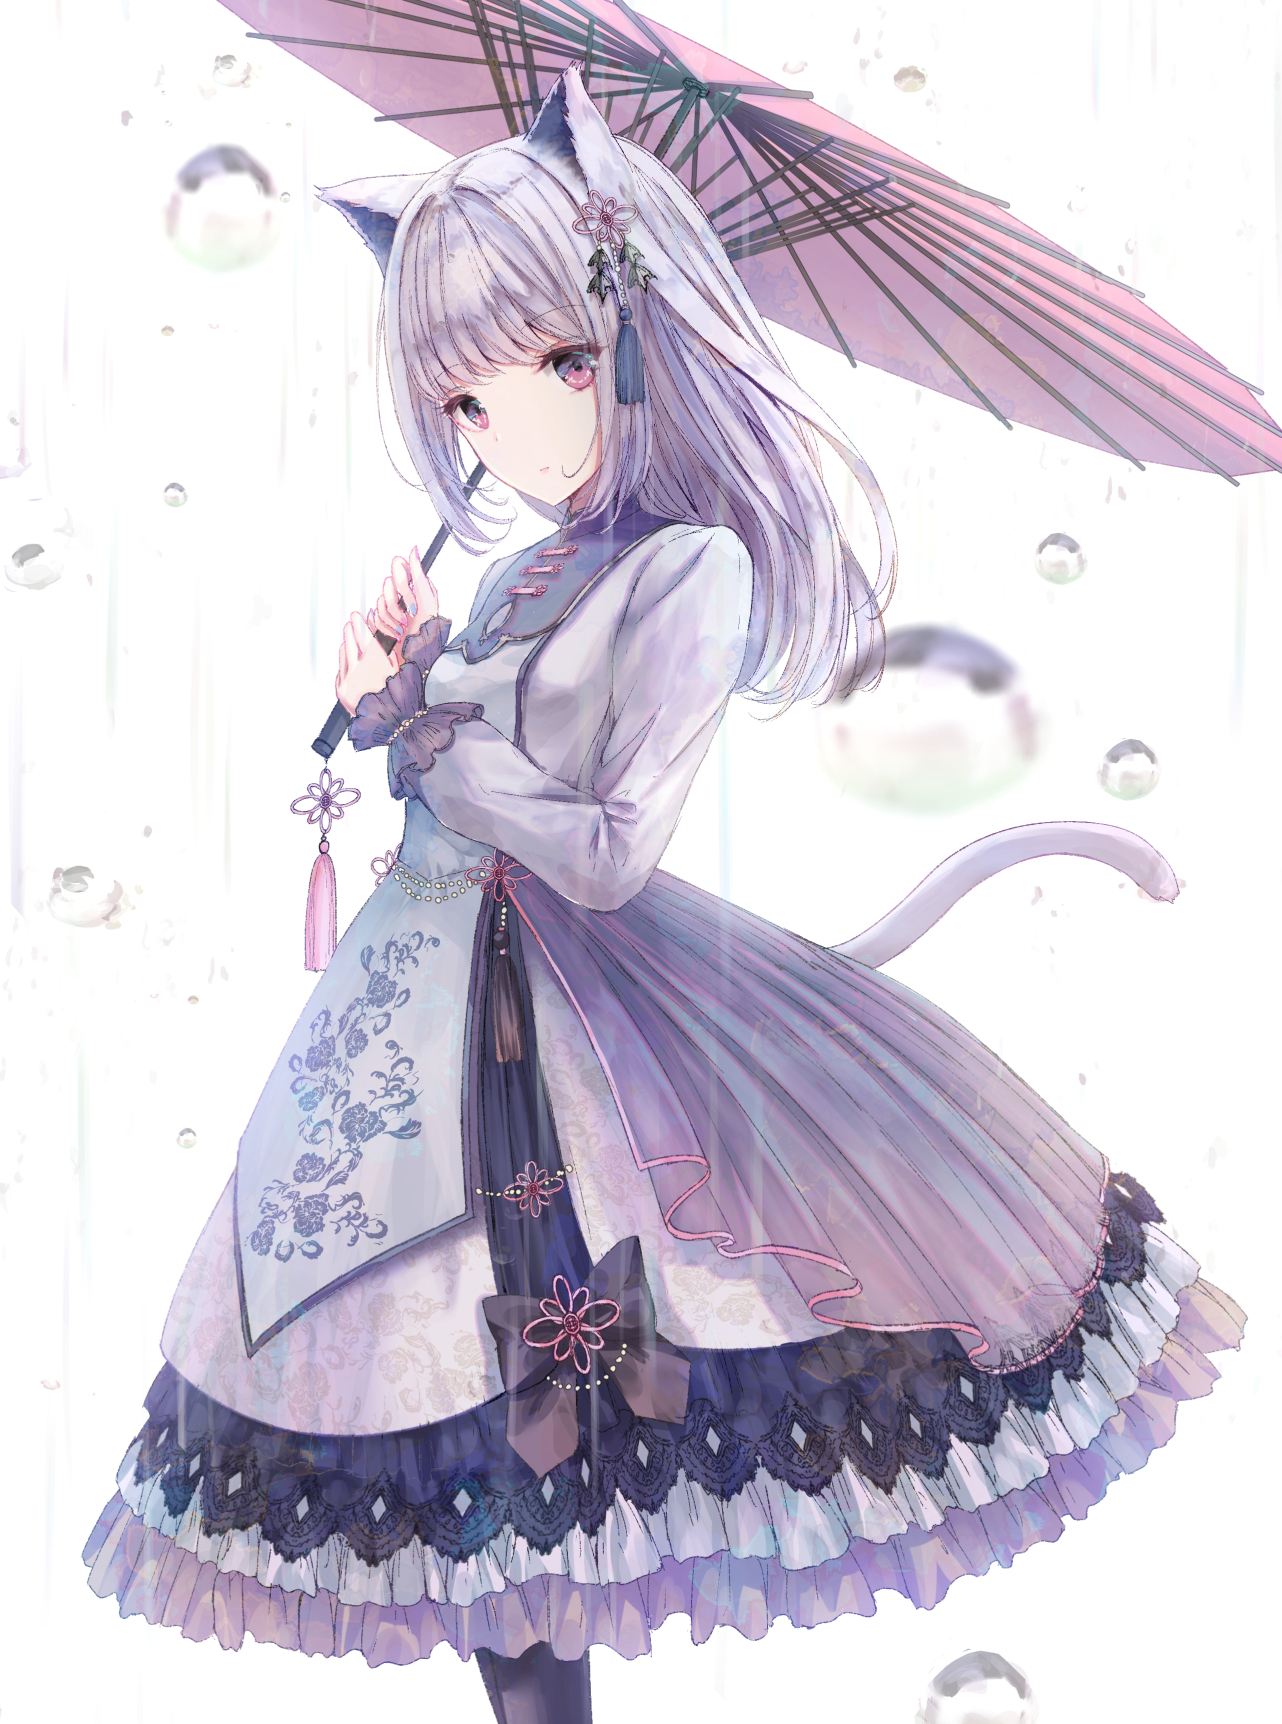 Anime 1282x1724 anime anime girls simple background original characters dress umbrella missile228 portrait display rain animal ears tail cat girl silver hair